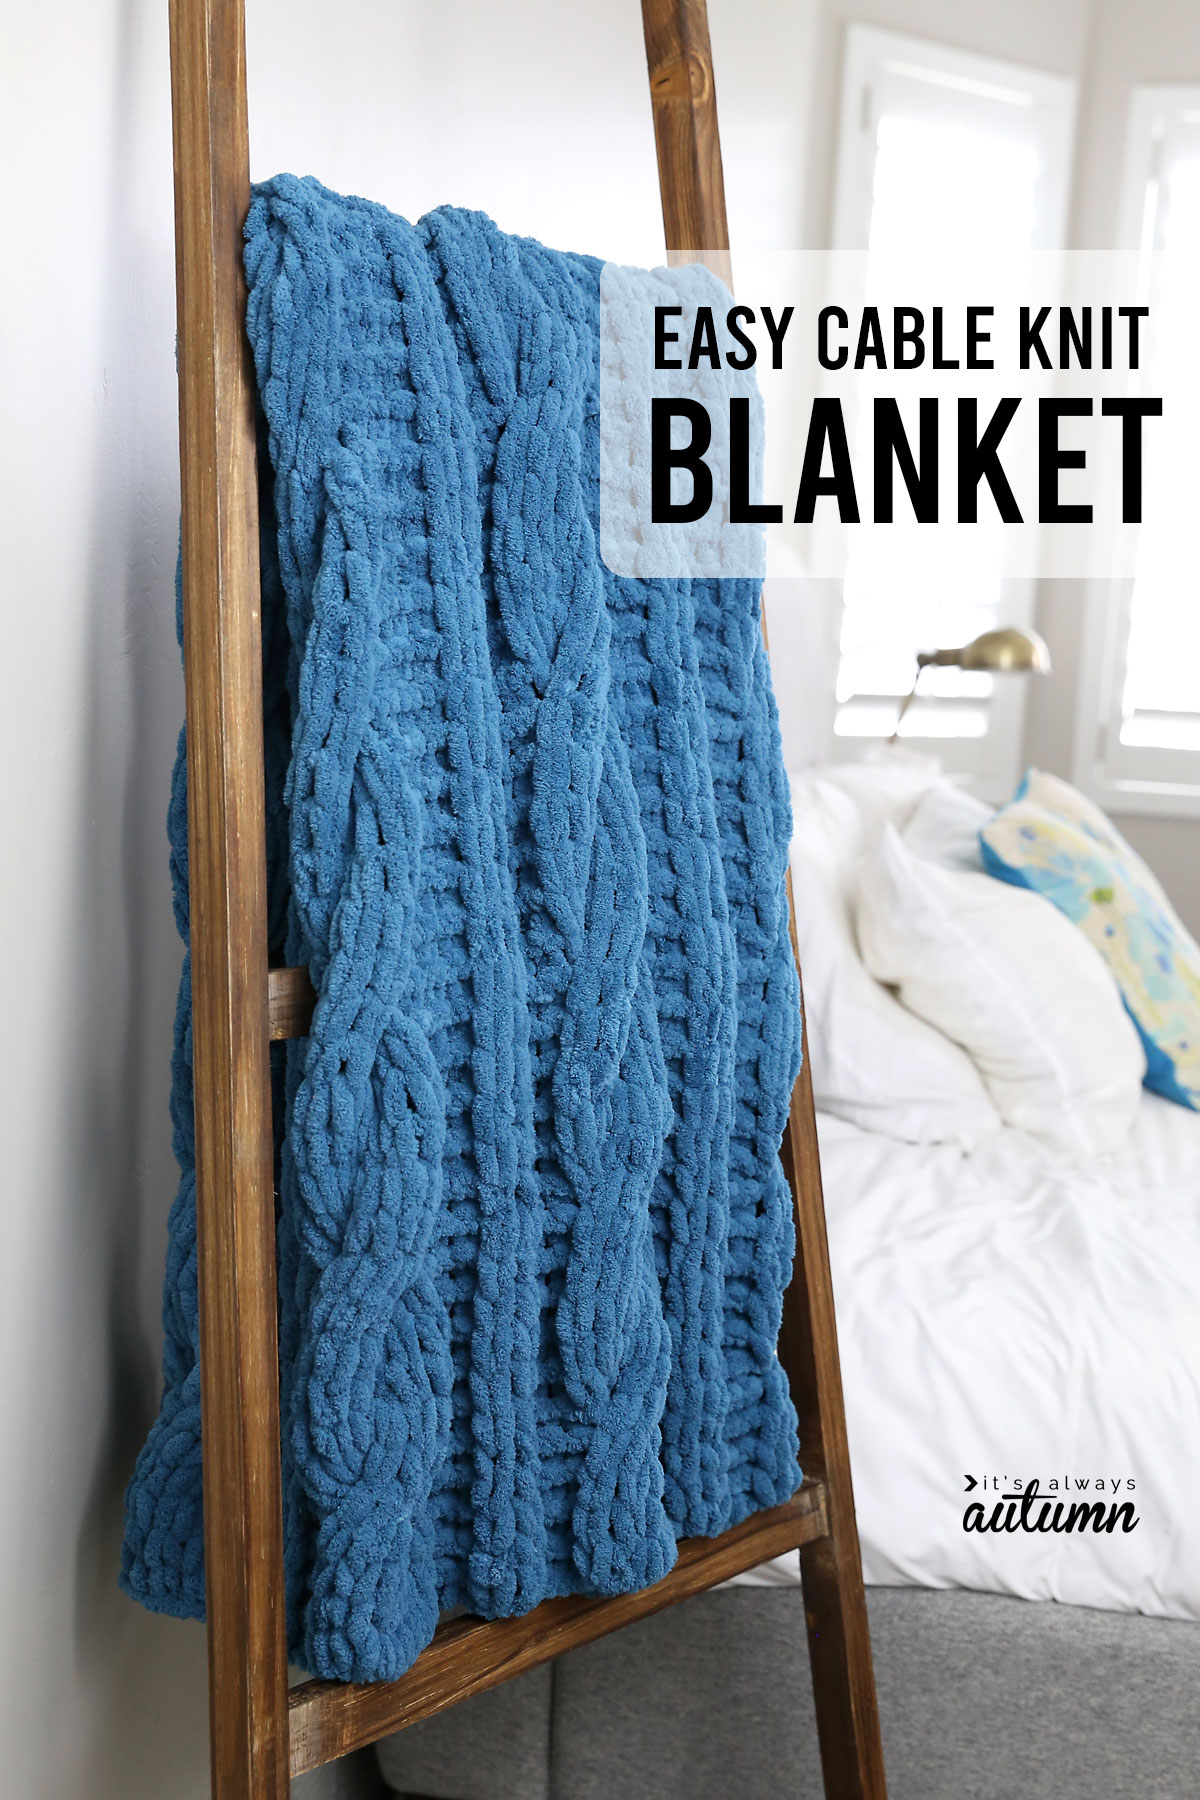 Easy cable knit blanket hanging on a blanket ladder